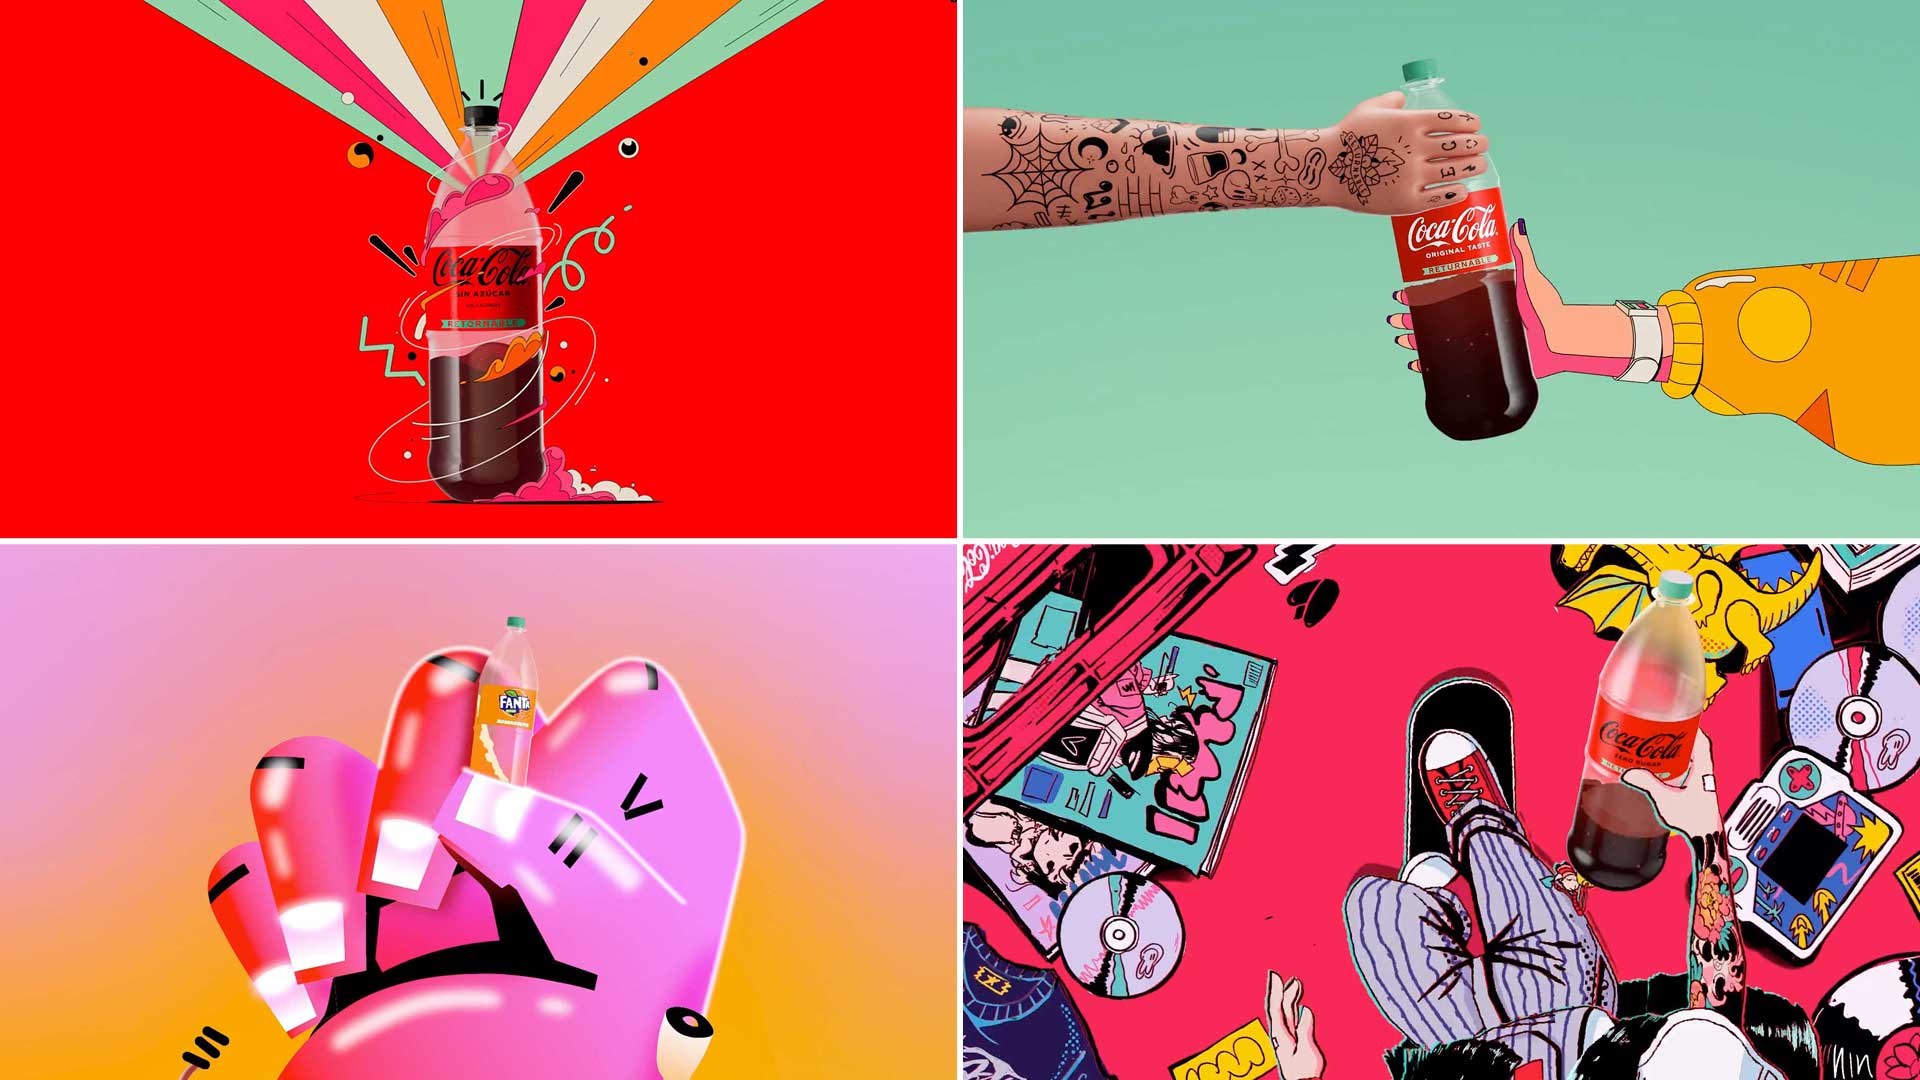 Le Cube and Friends Make Sure Coca-Cola is “Reborn” – Motion design [Video]